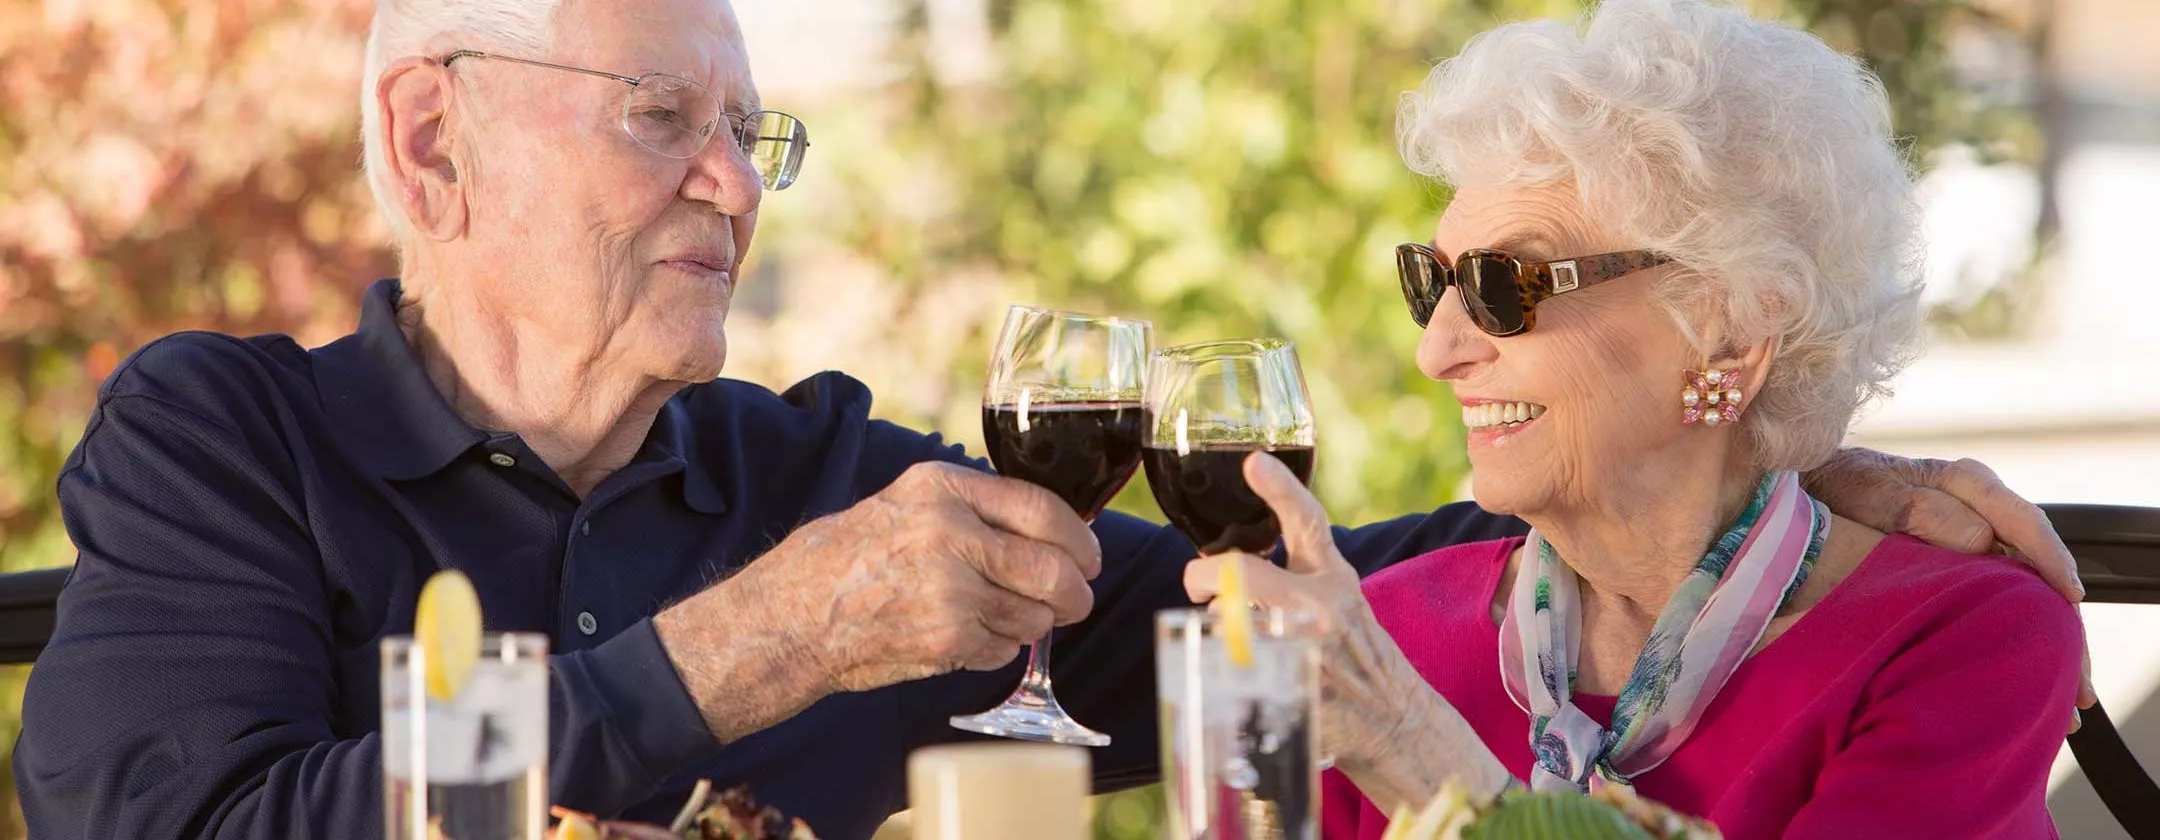 Happy couple having wine outside on patio